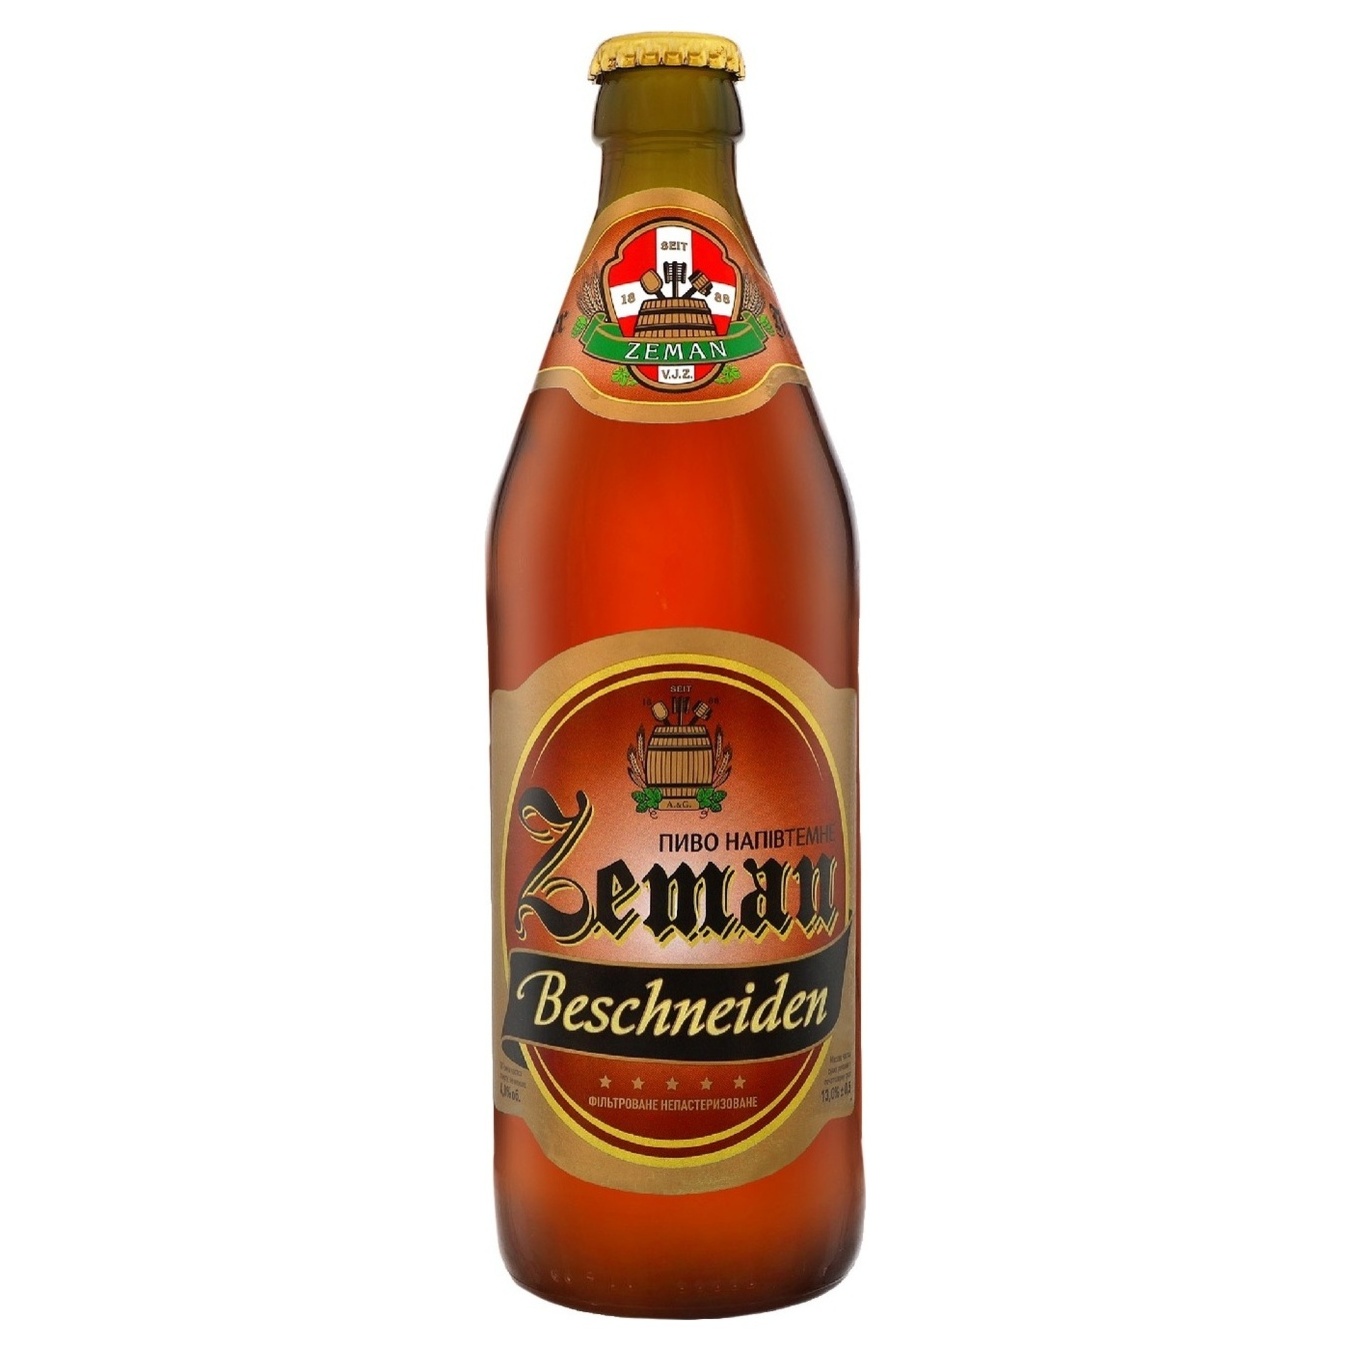 Beer Zeman Beschneiden semi-dark 4% 0.5l glass bottle